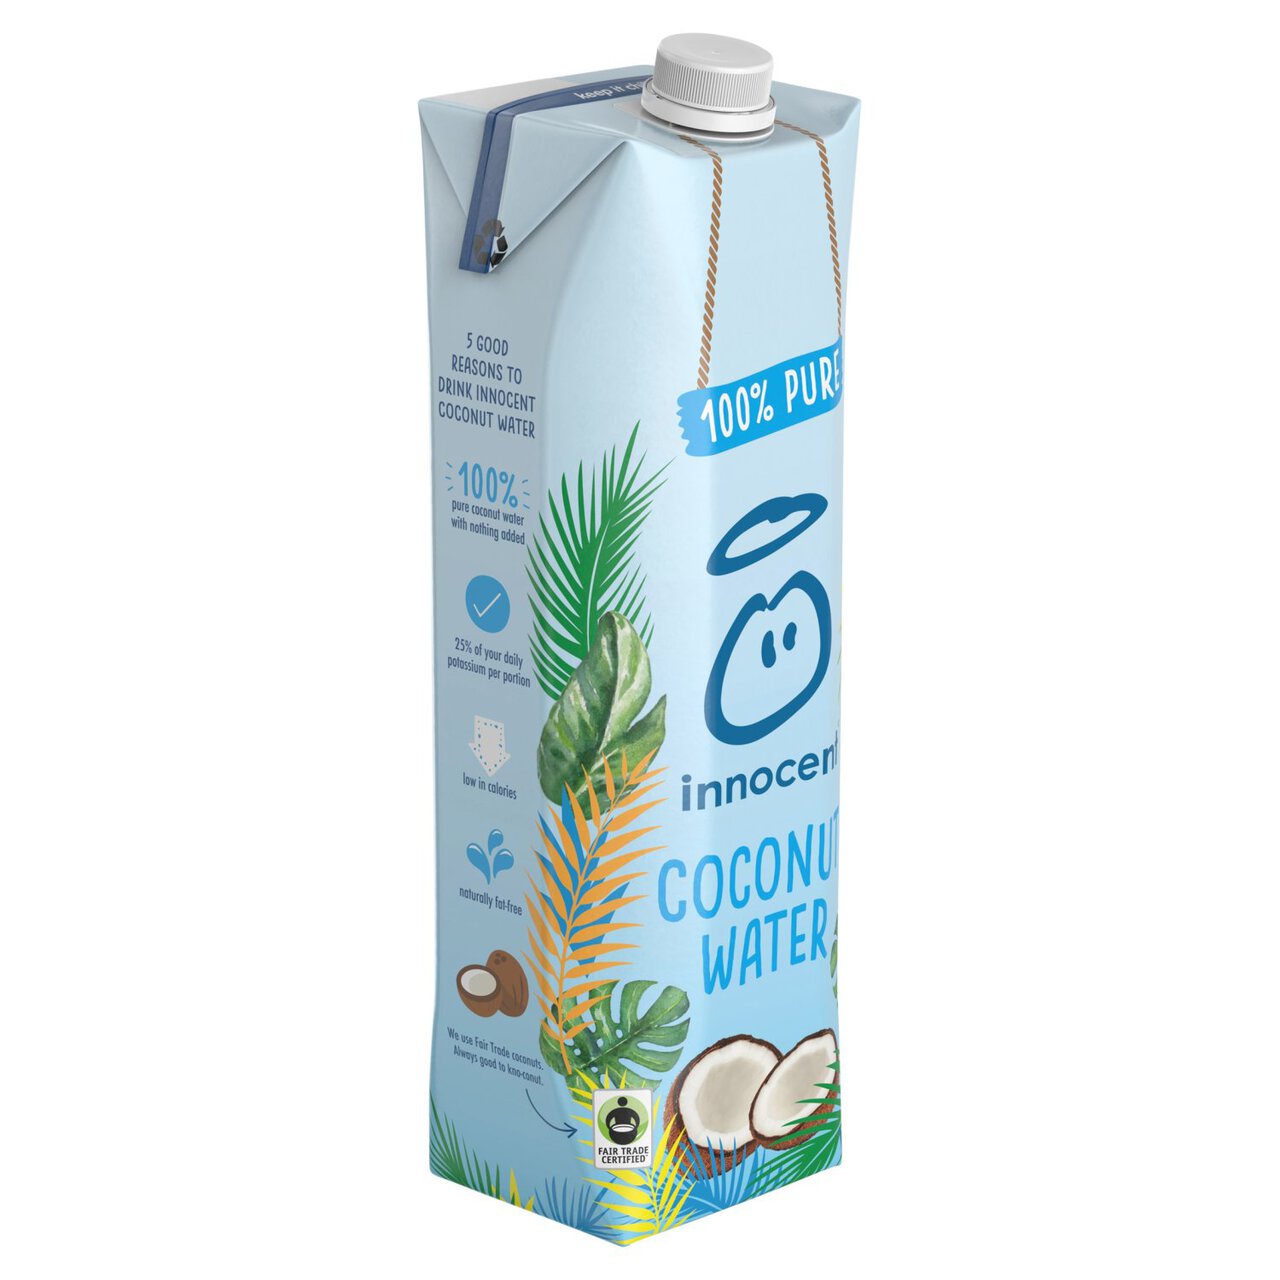 Innocent Coconut Water 1l